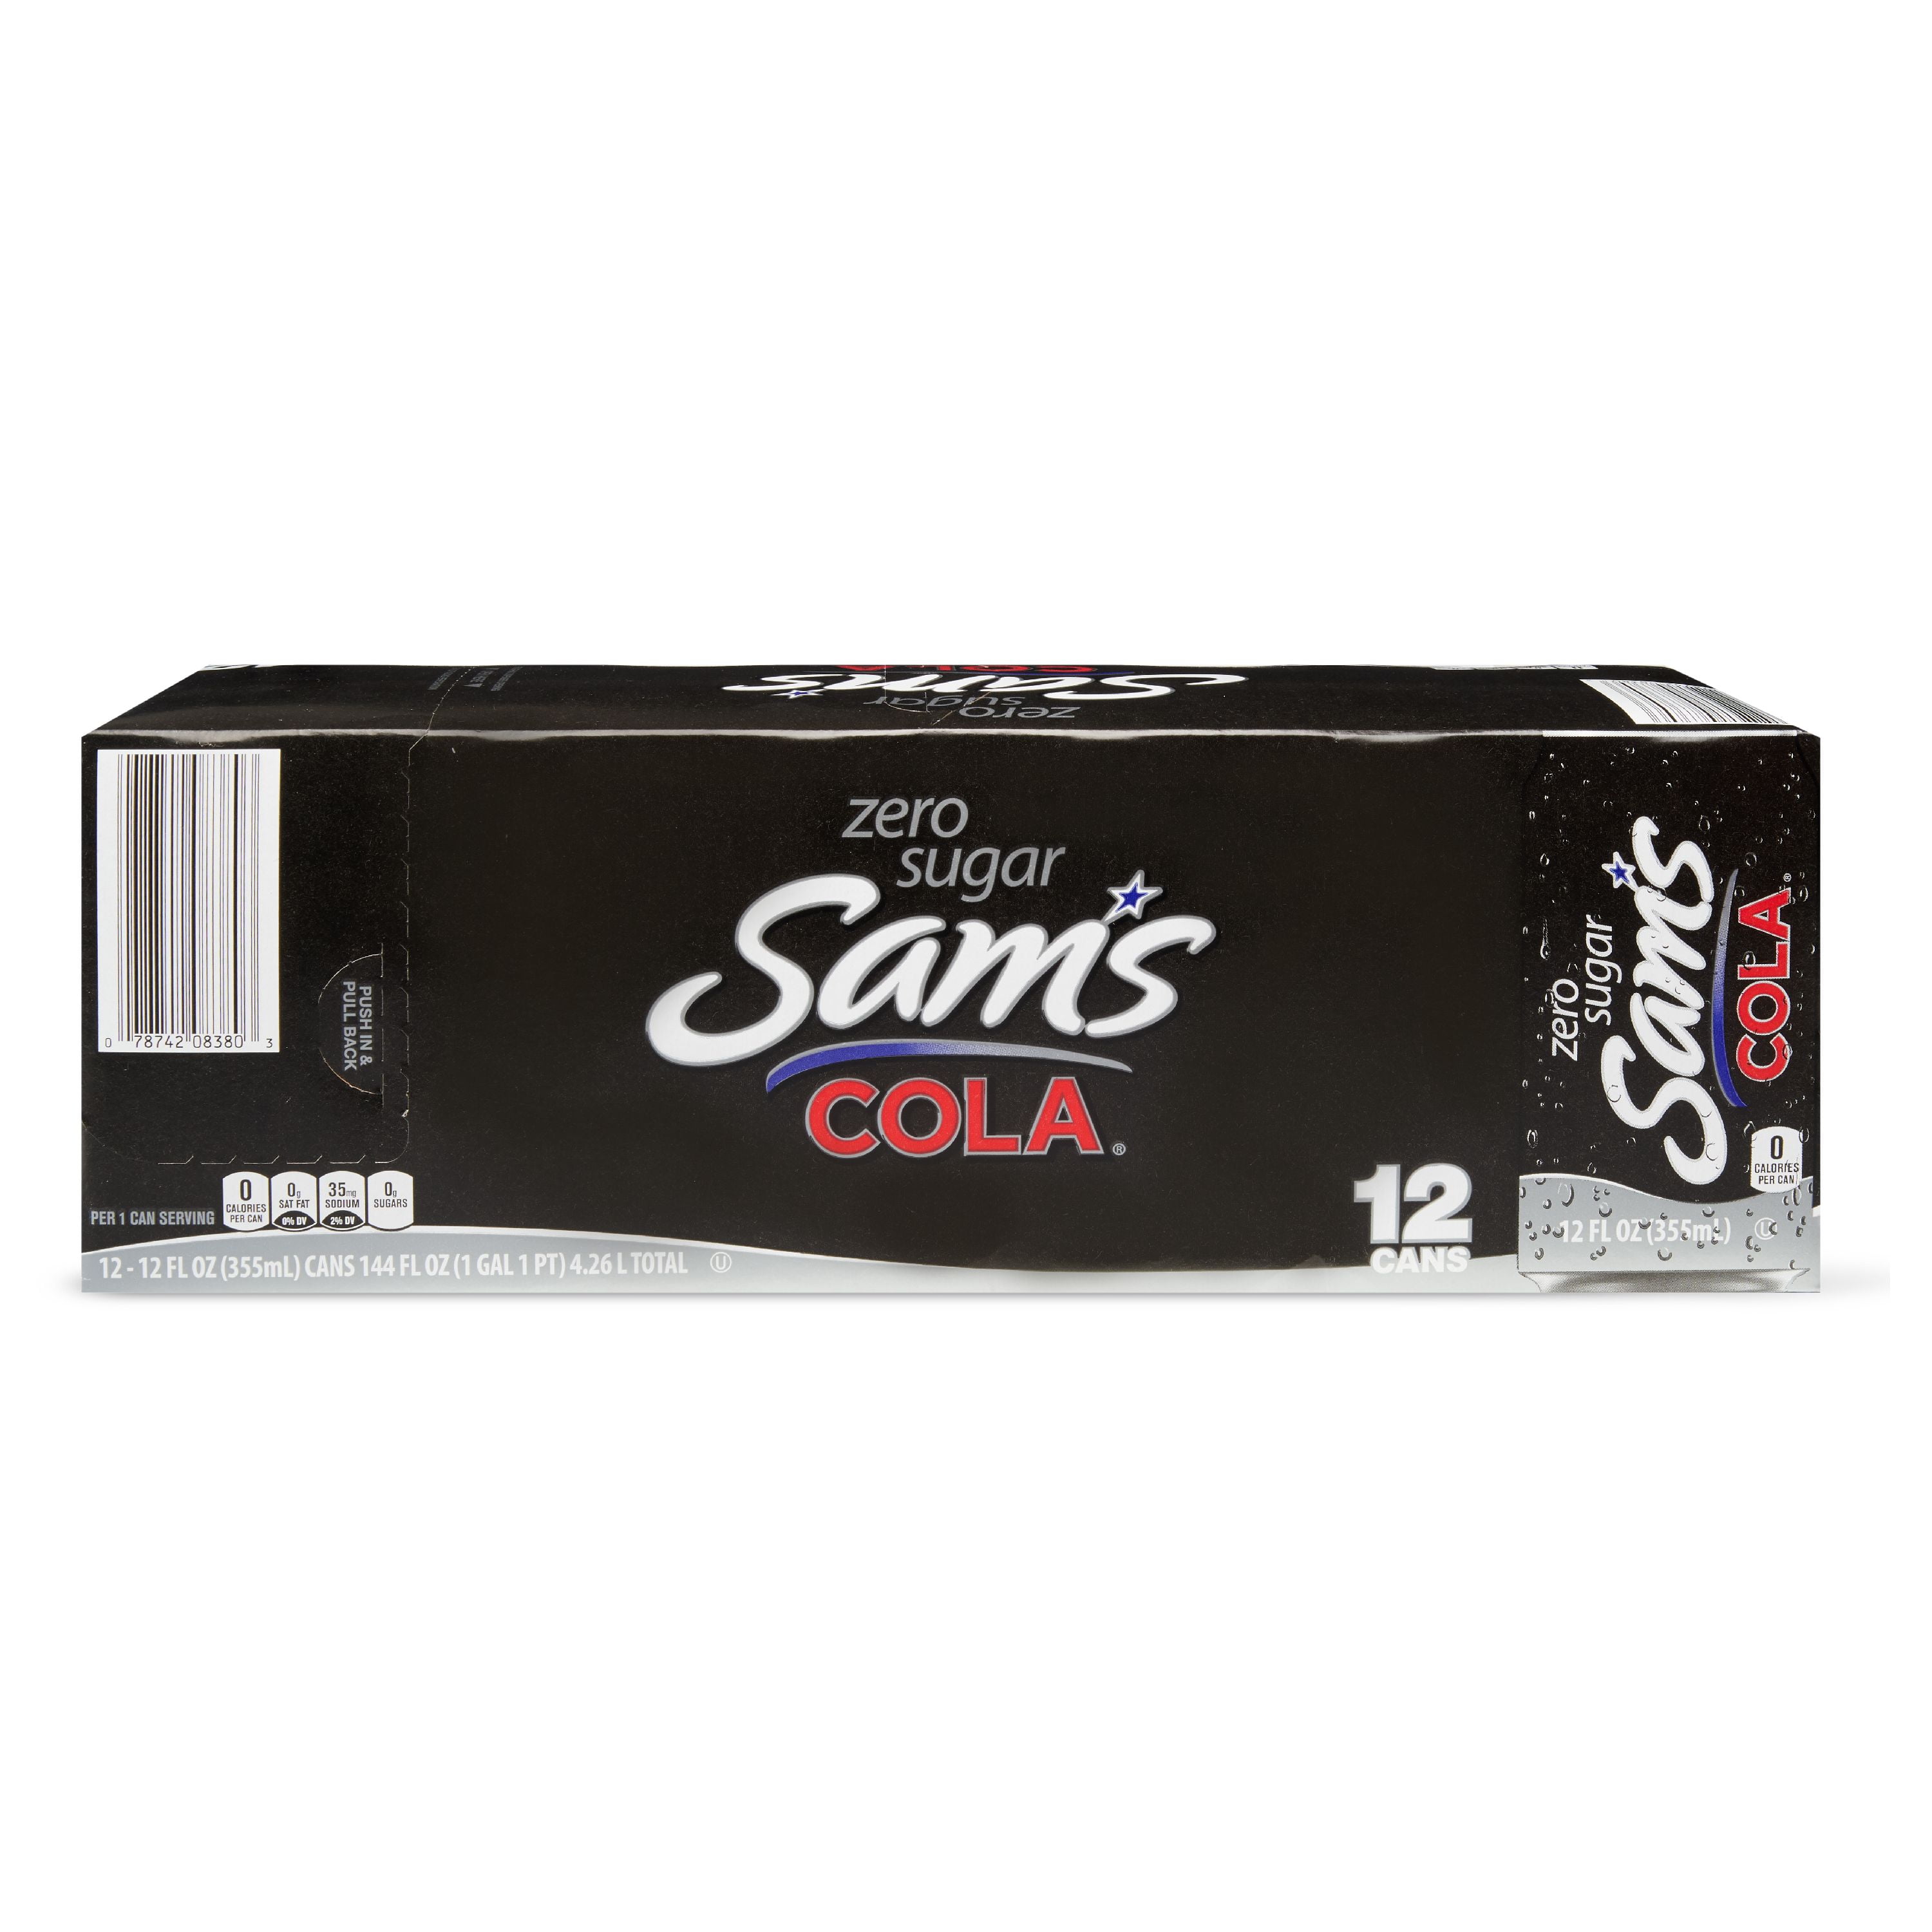 Sam's Cola Soda Pop, 12 fl oz, 24 Pack Cans